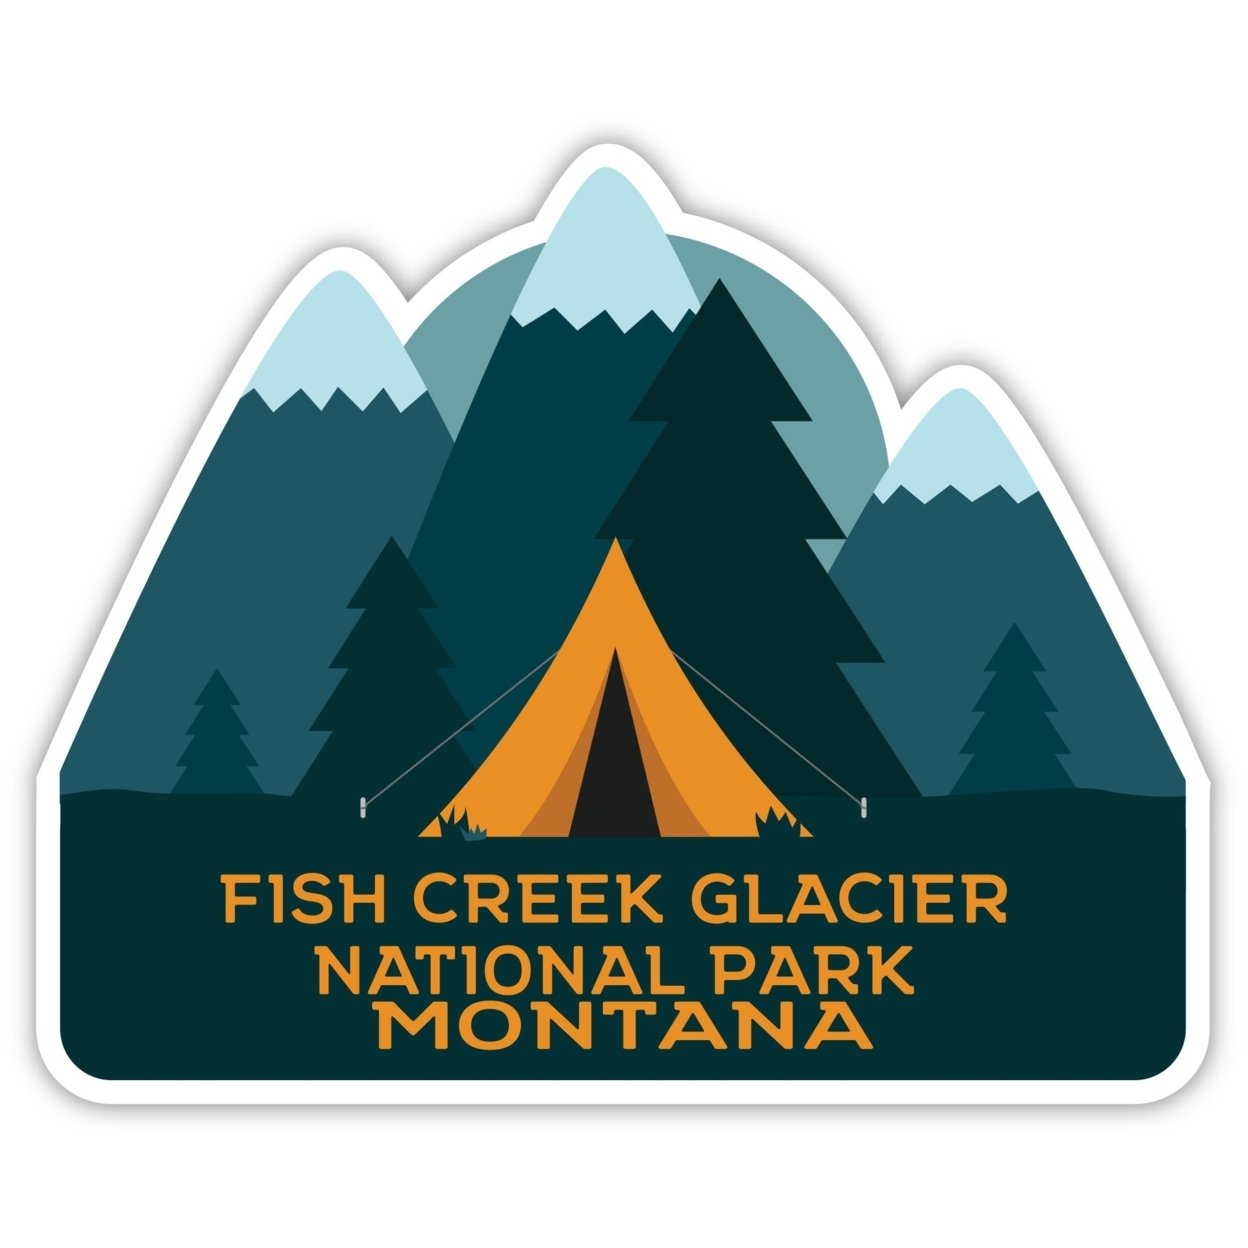 Fish Creek Glacier National Park Montana Souvenir Decorative Stickers (Choose Theme And Size) - 4-Pack, 2-Inch, Tent